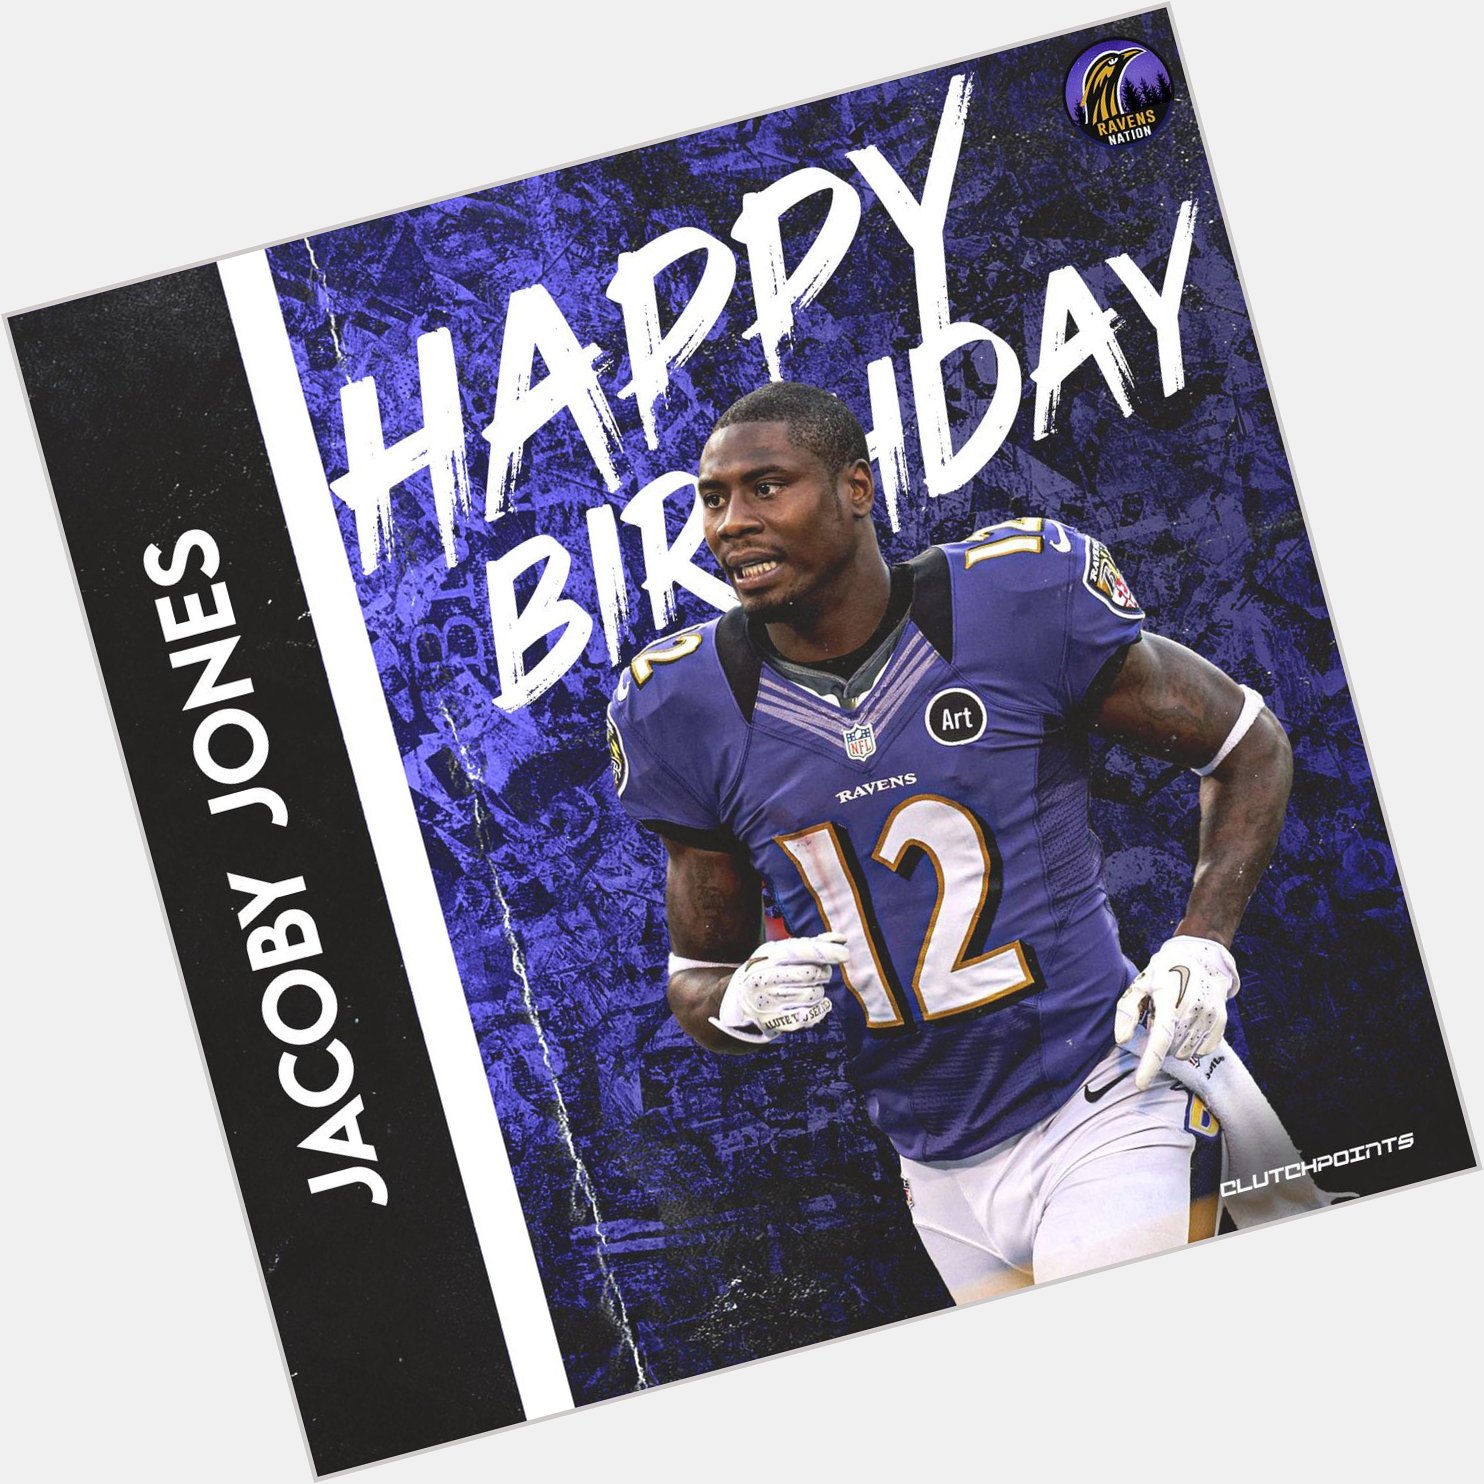 Ravens Flock, let\s wish a very happy 38th birthday to Jacoby Jones 